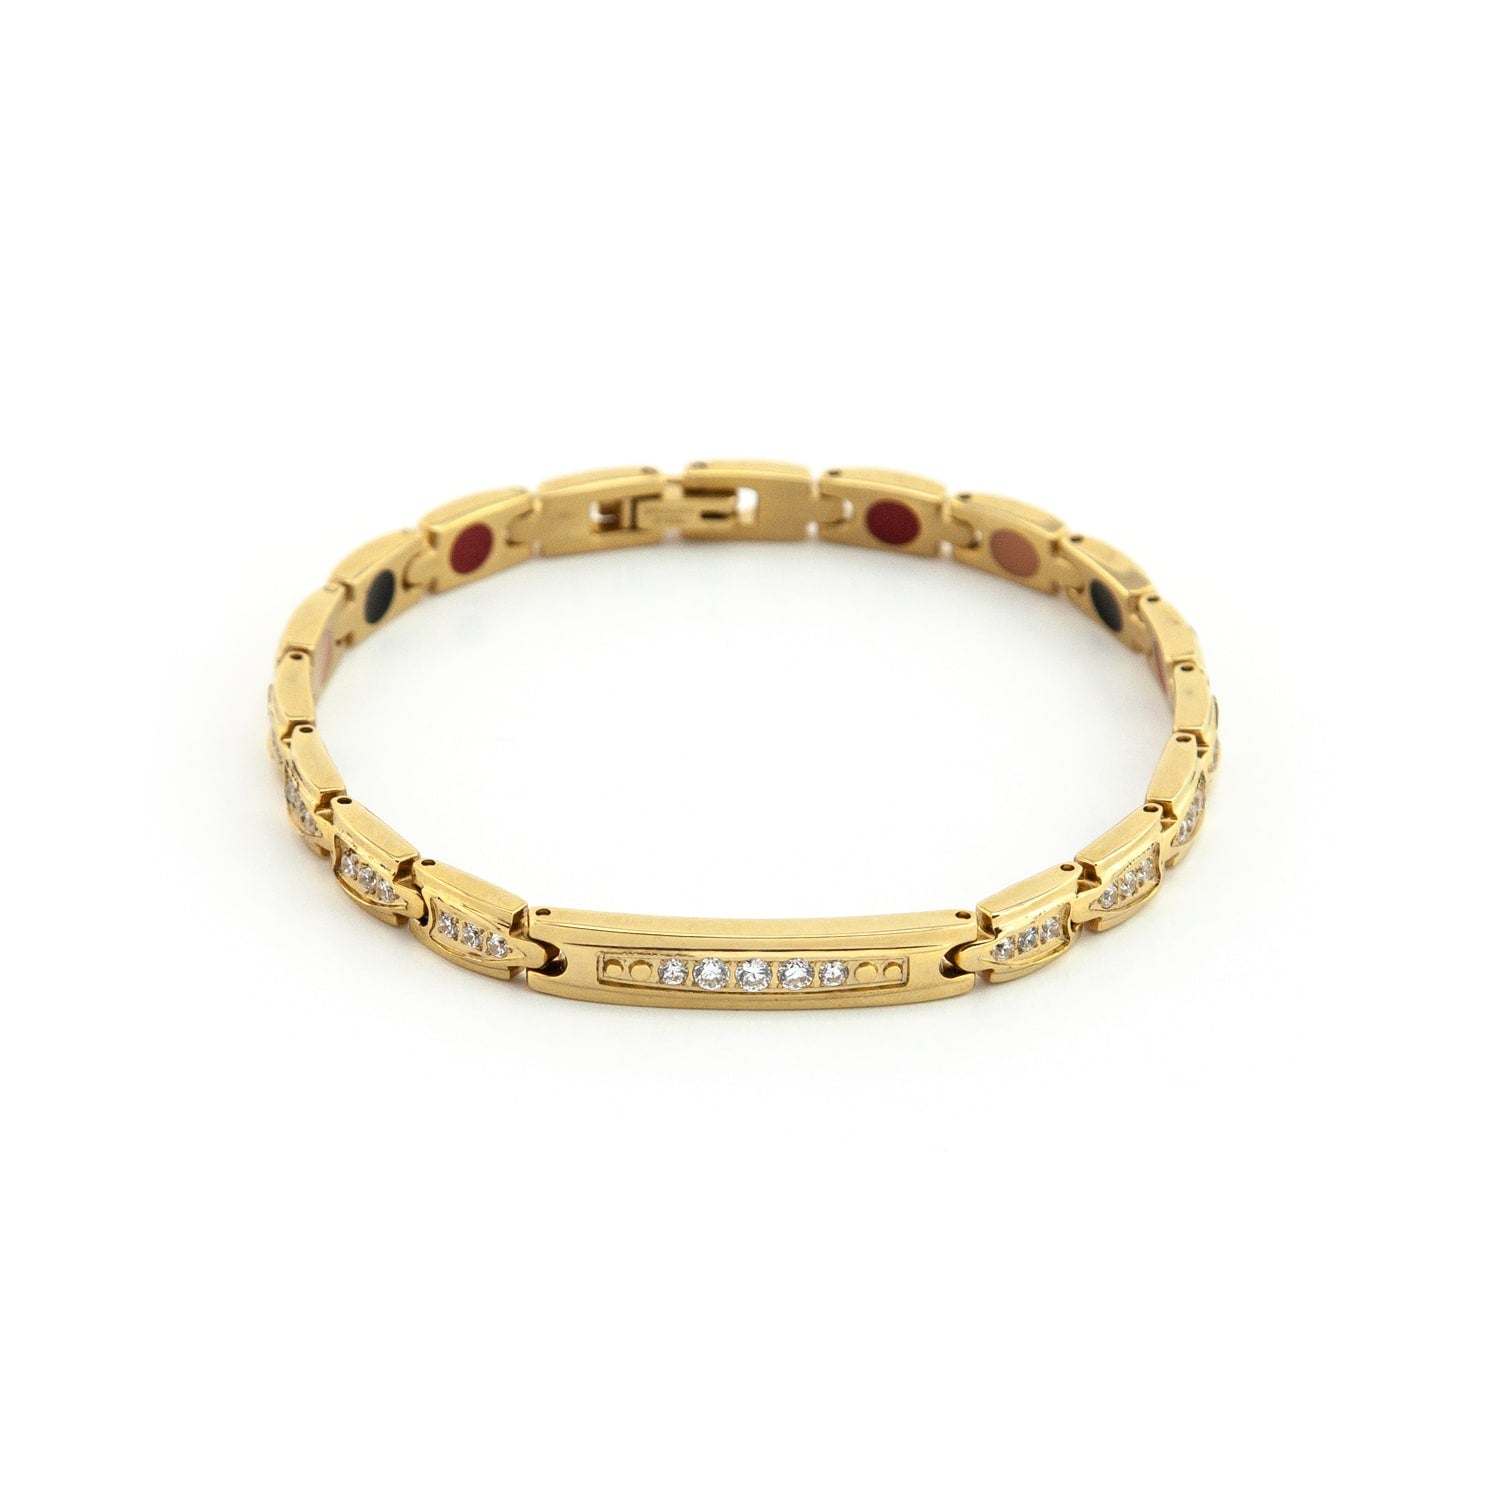 Adored - Negative Ion Bracelet, Gold with Swarovski Crystals